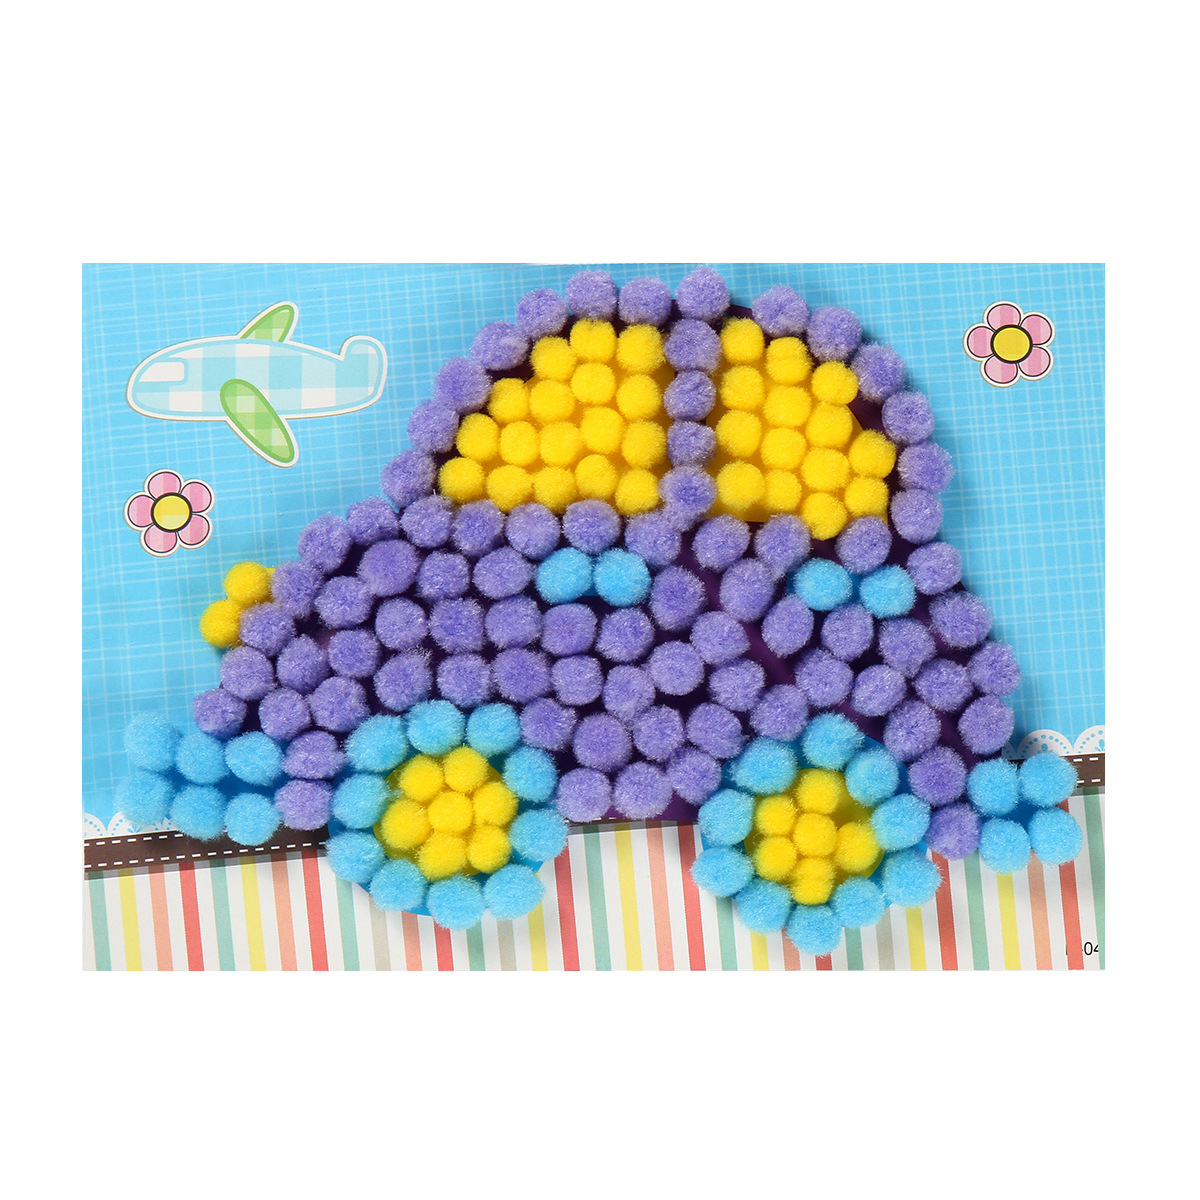 DIY手工制作材料包 毛毛球画 绒球粘粘贴 益智手工玩具安全环保-阿里巴巴